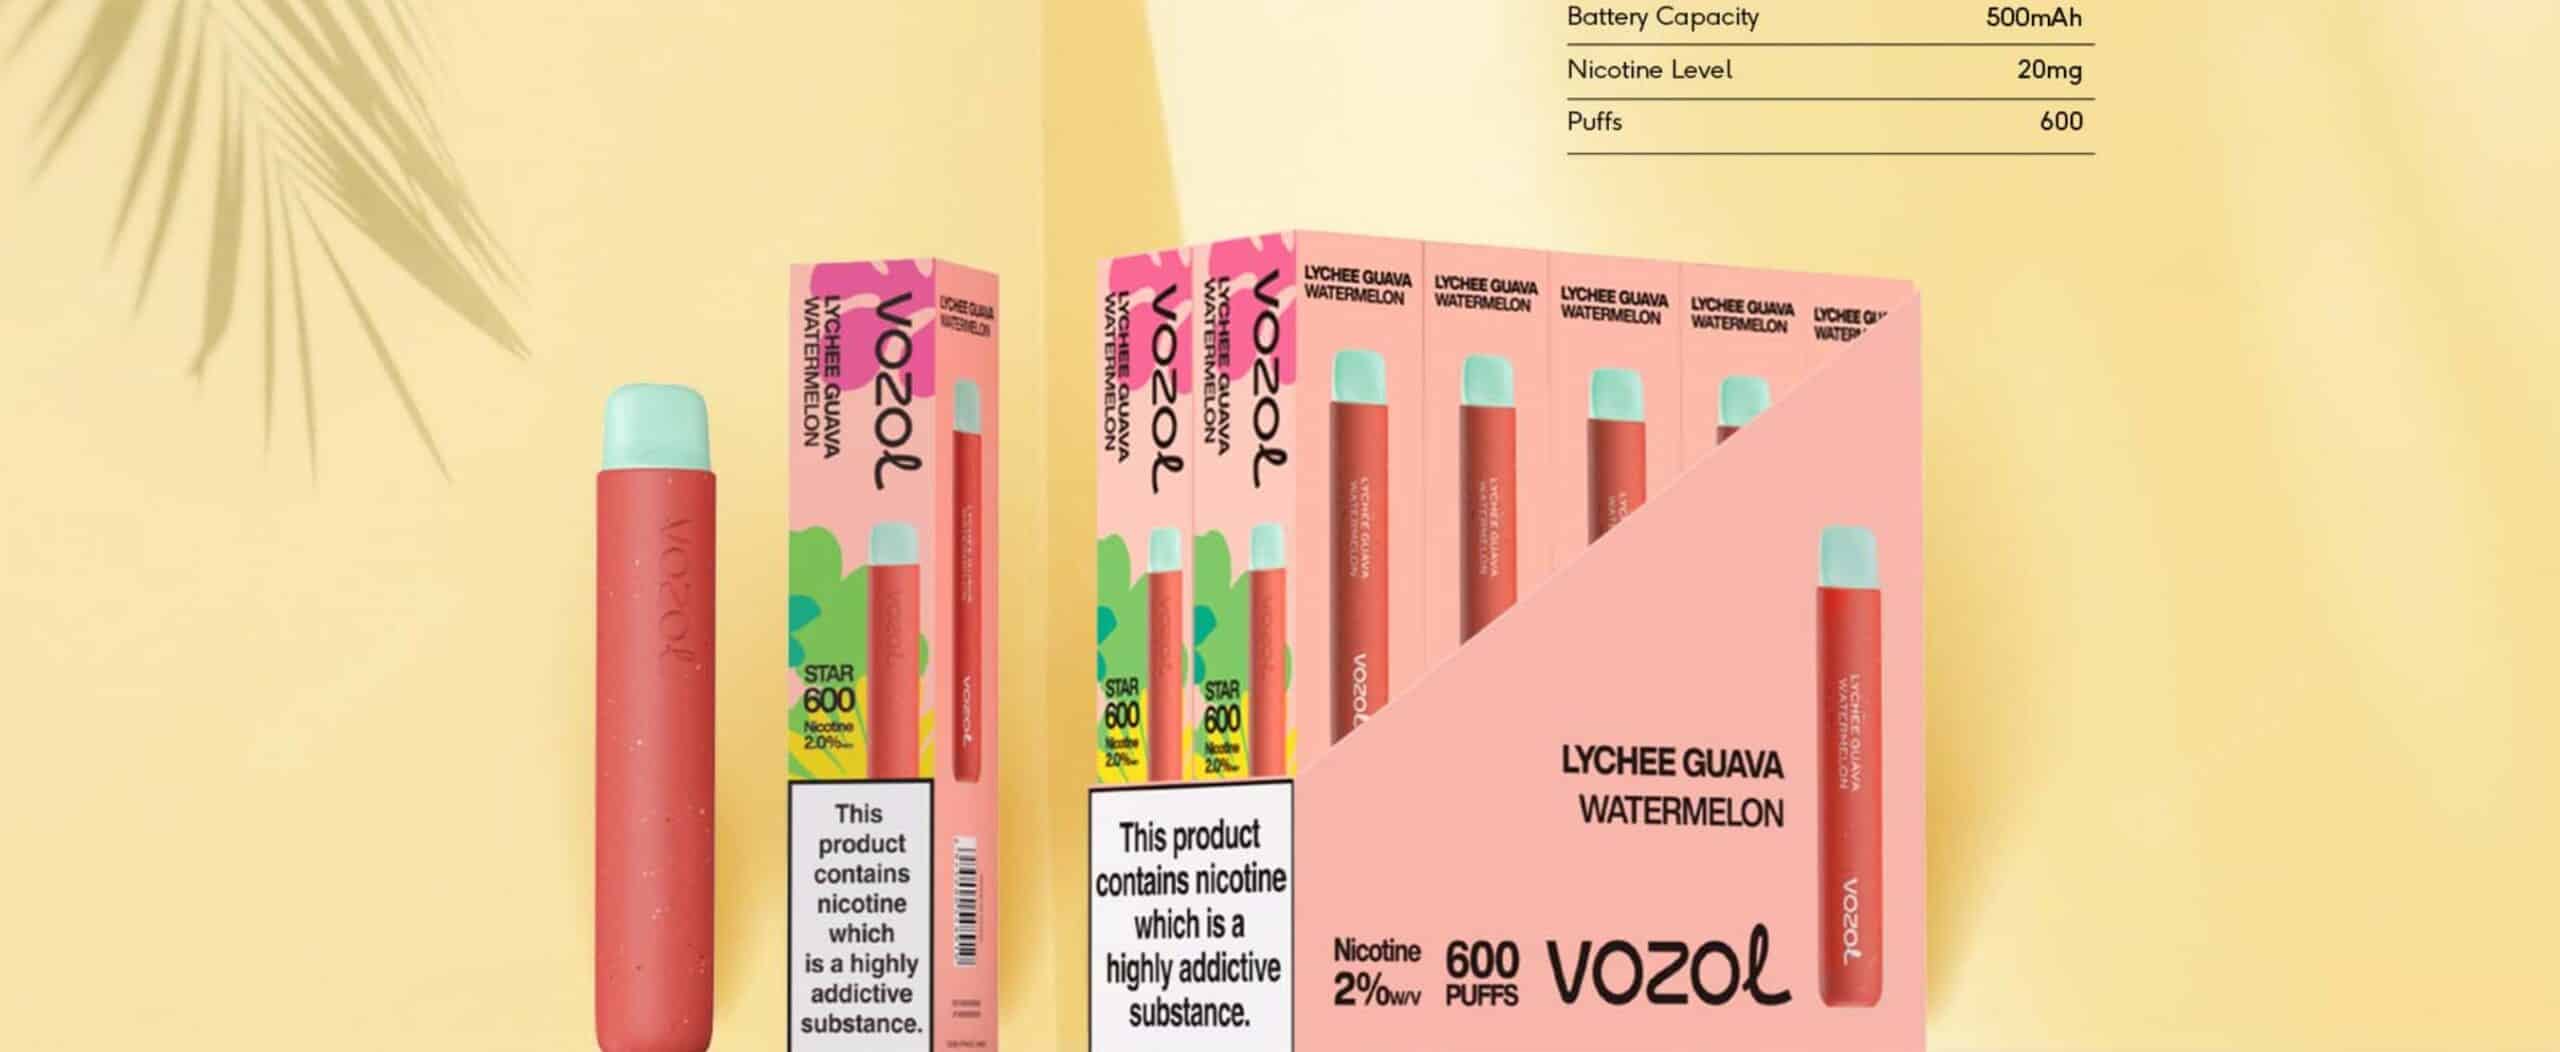 Vozol star 600 disposable kit specifications